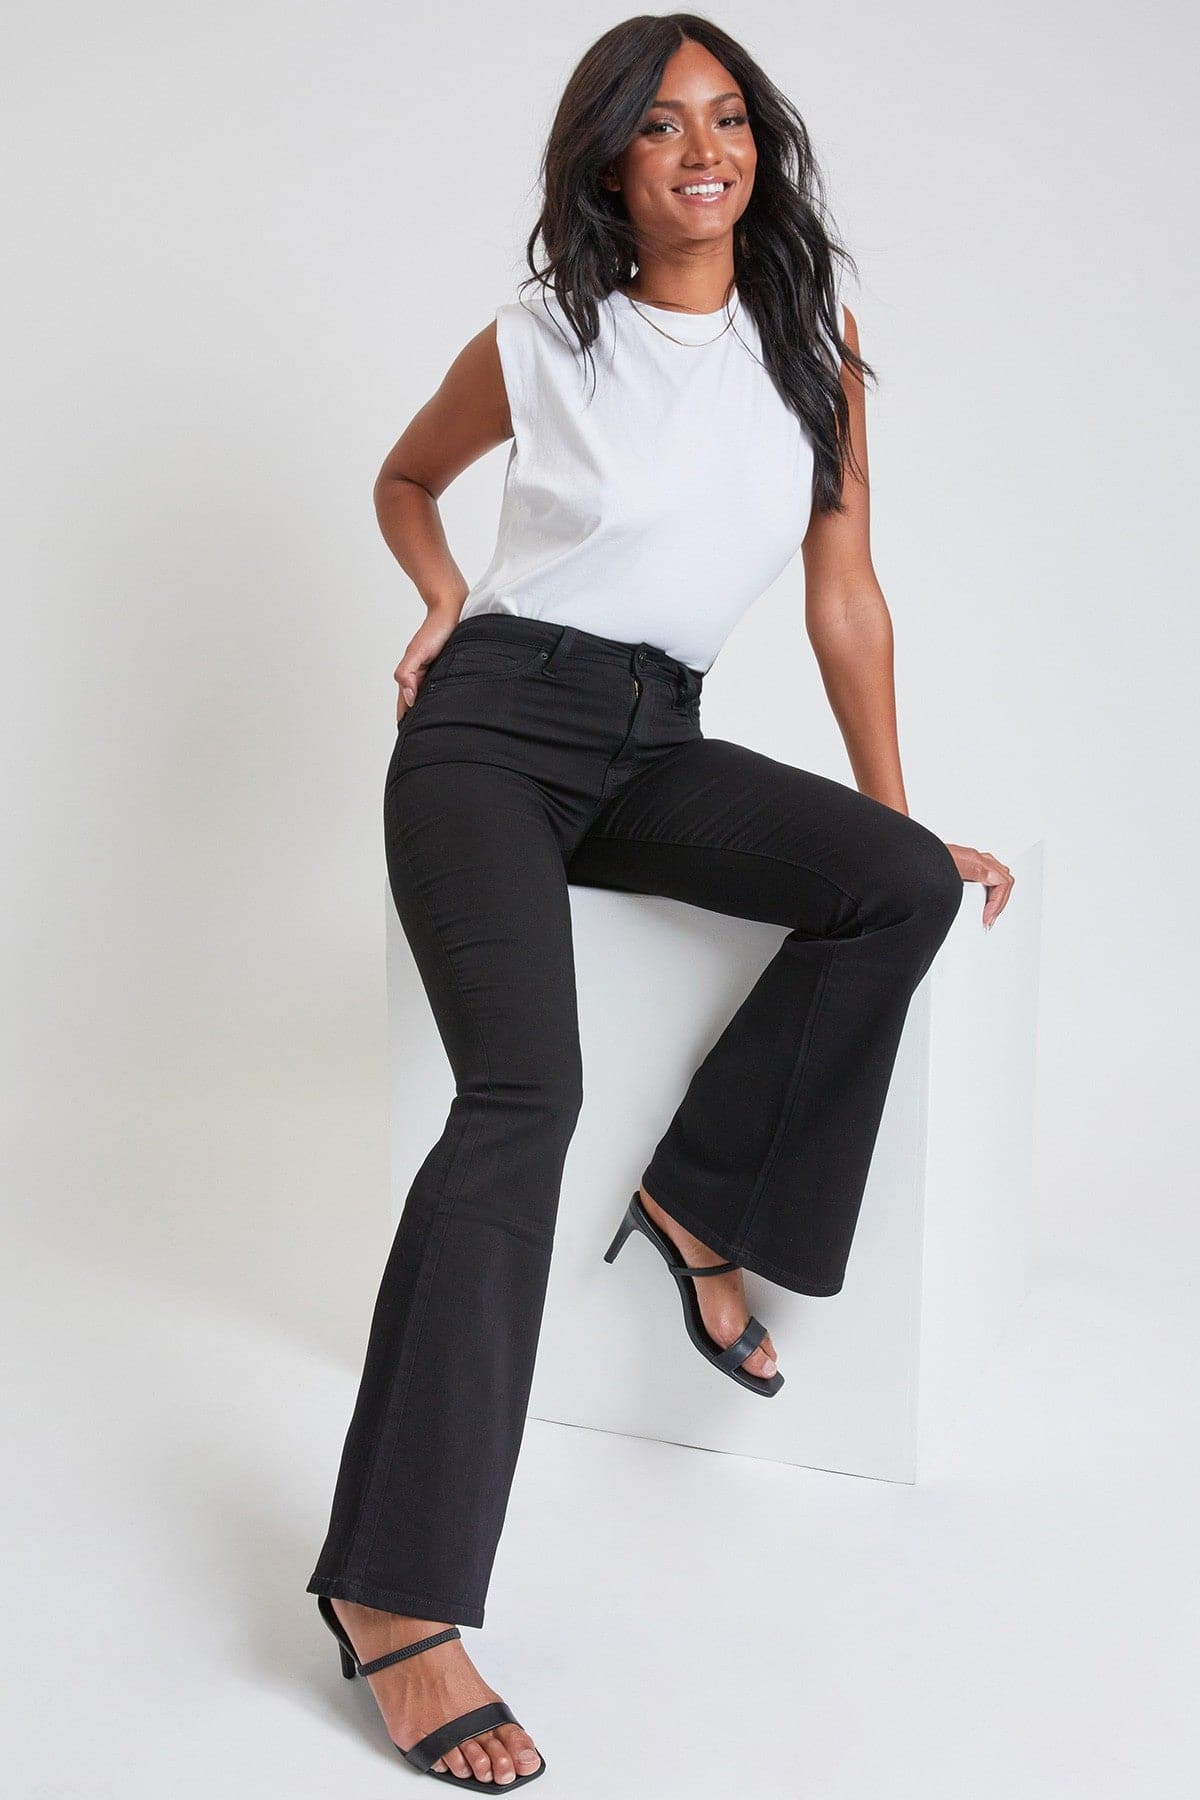 Women's Essential Hyperdenim Flare Jeans - Long